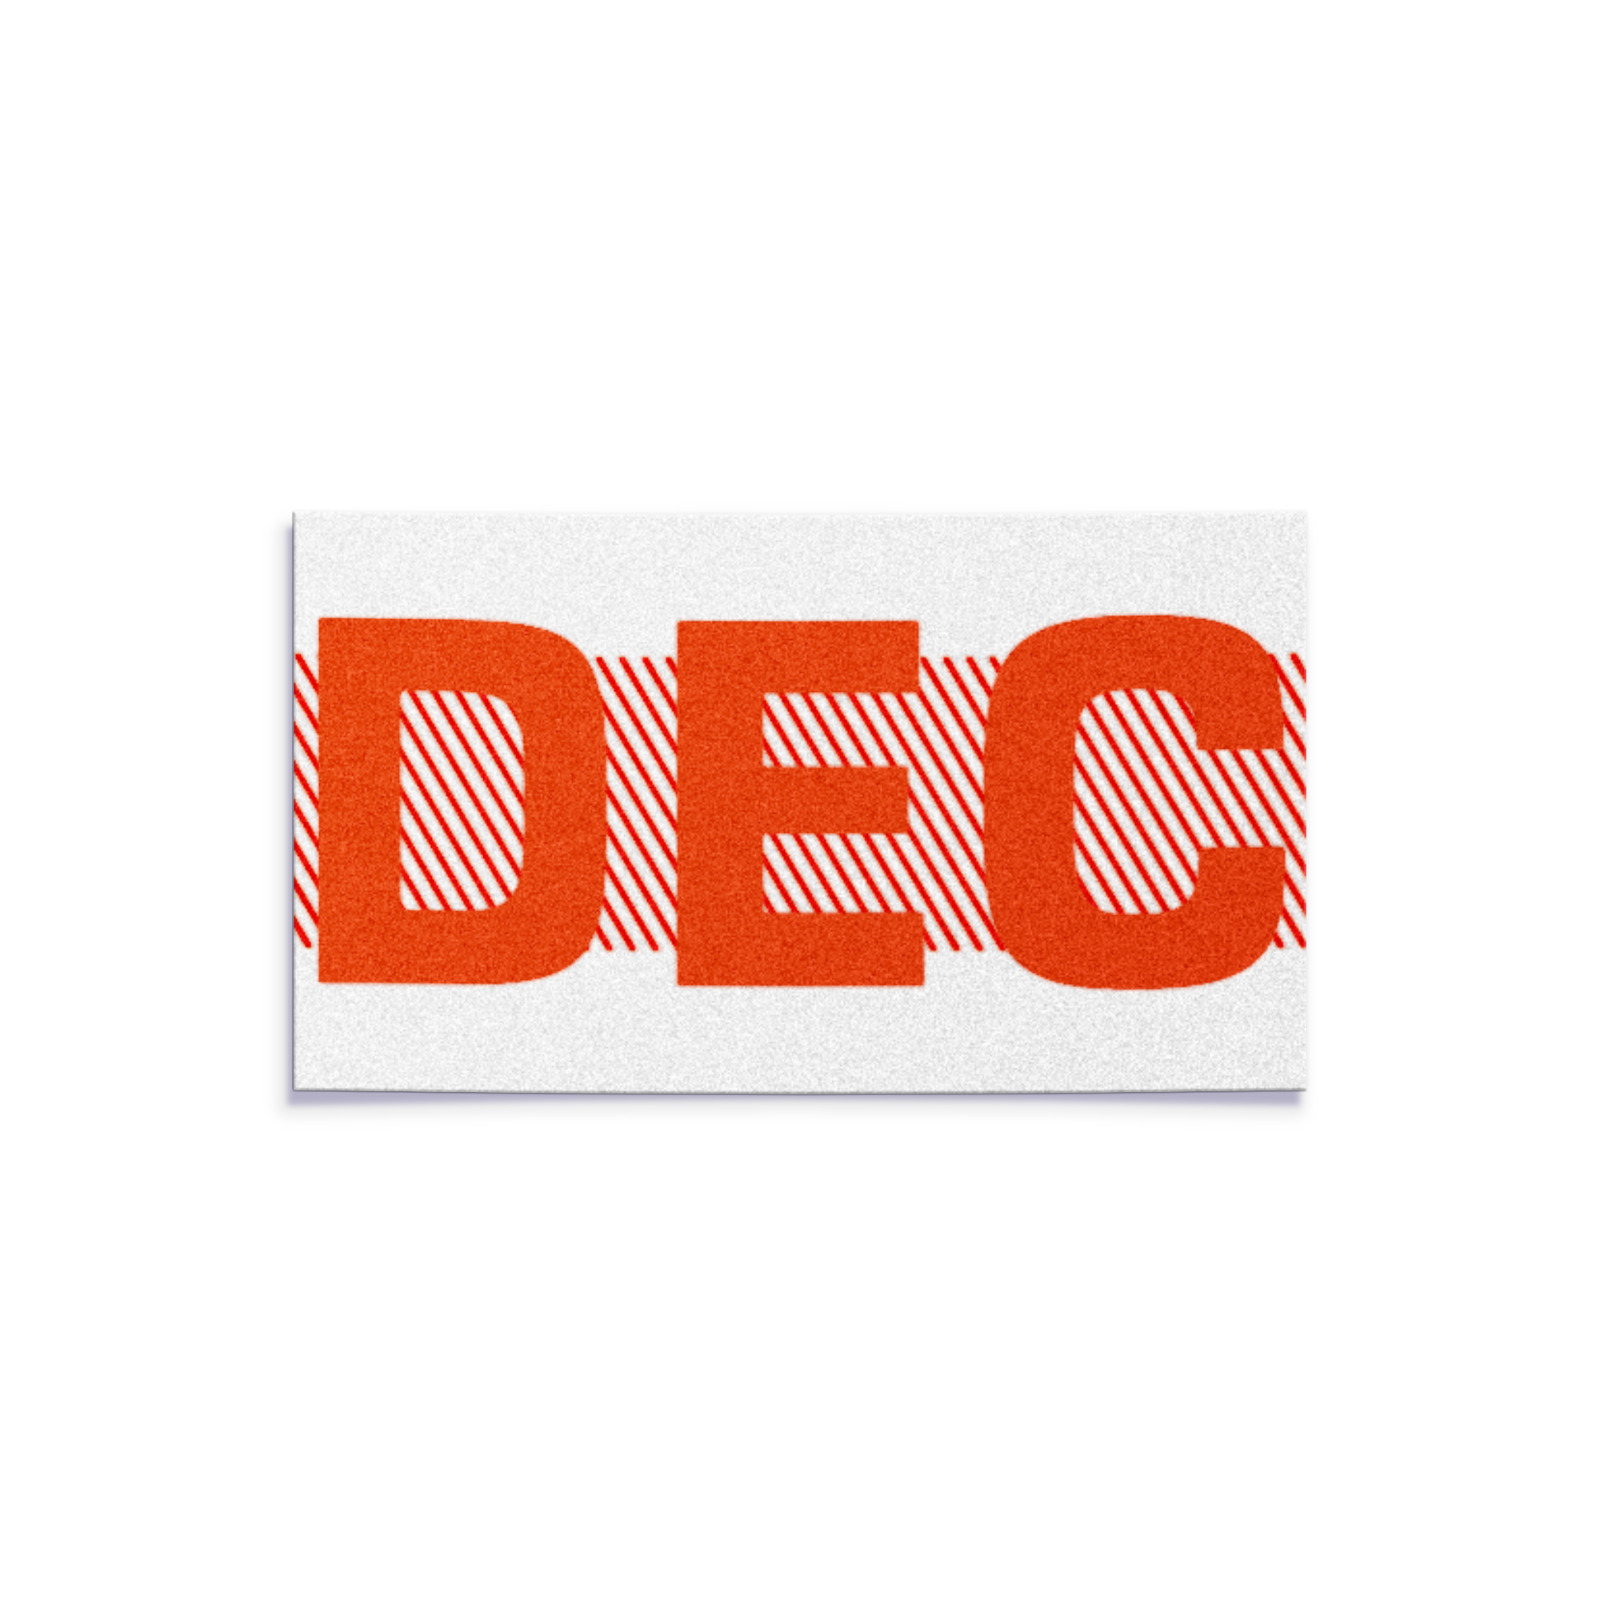 DECEMBER - California License Plate RED Month Sticker - DMV Registration YOM Tag